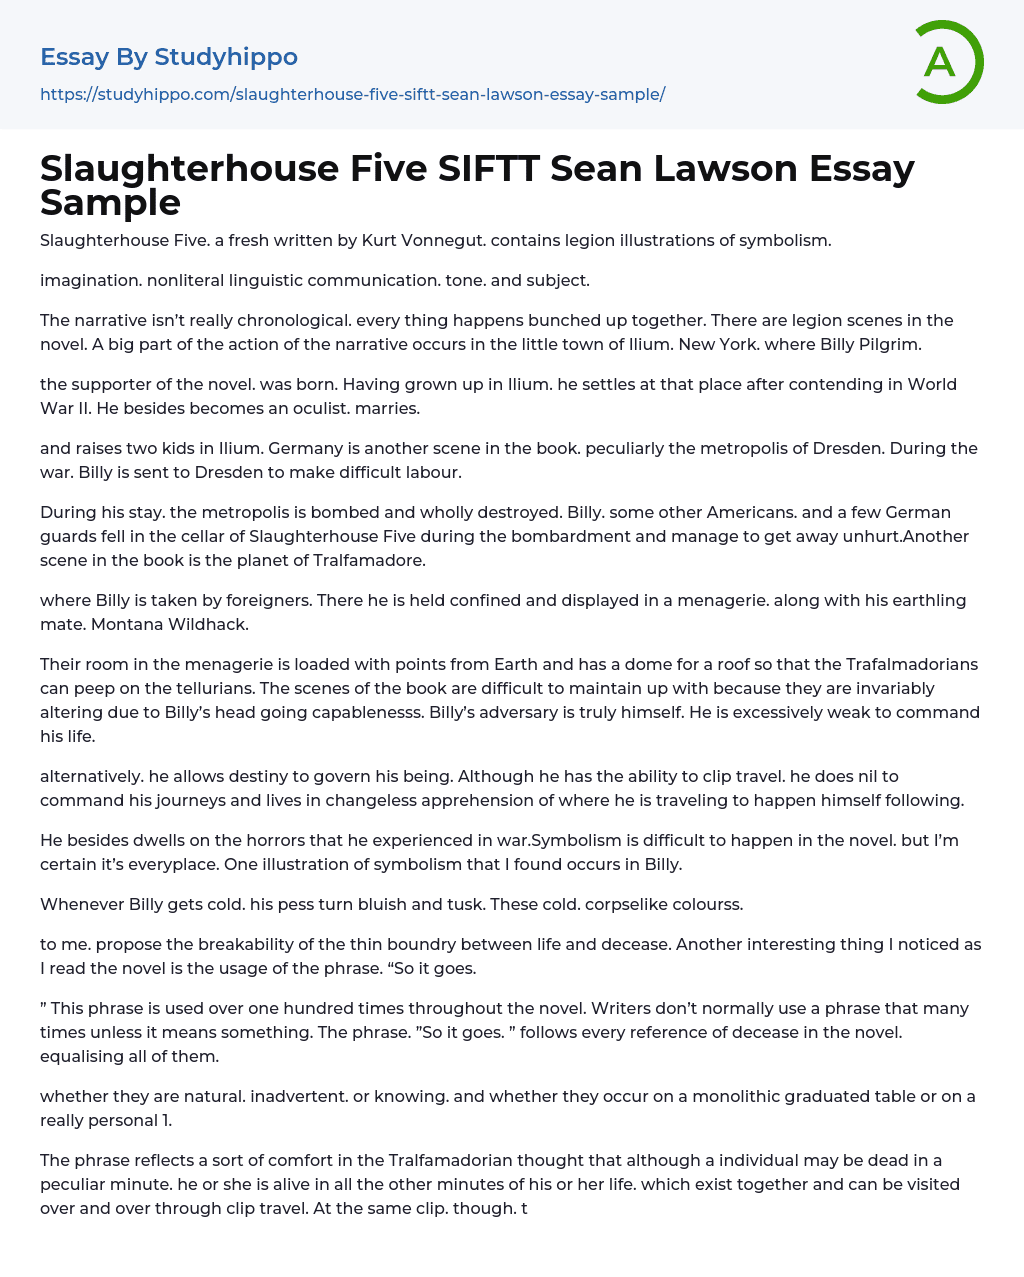 Slaughterhouse Five SIFTT Sean Lawson Essay Sample